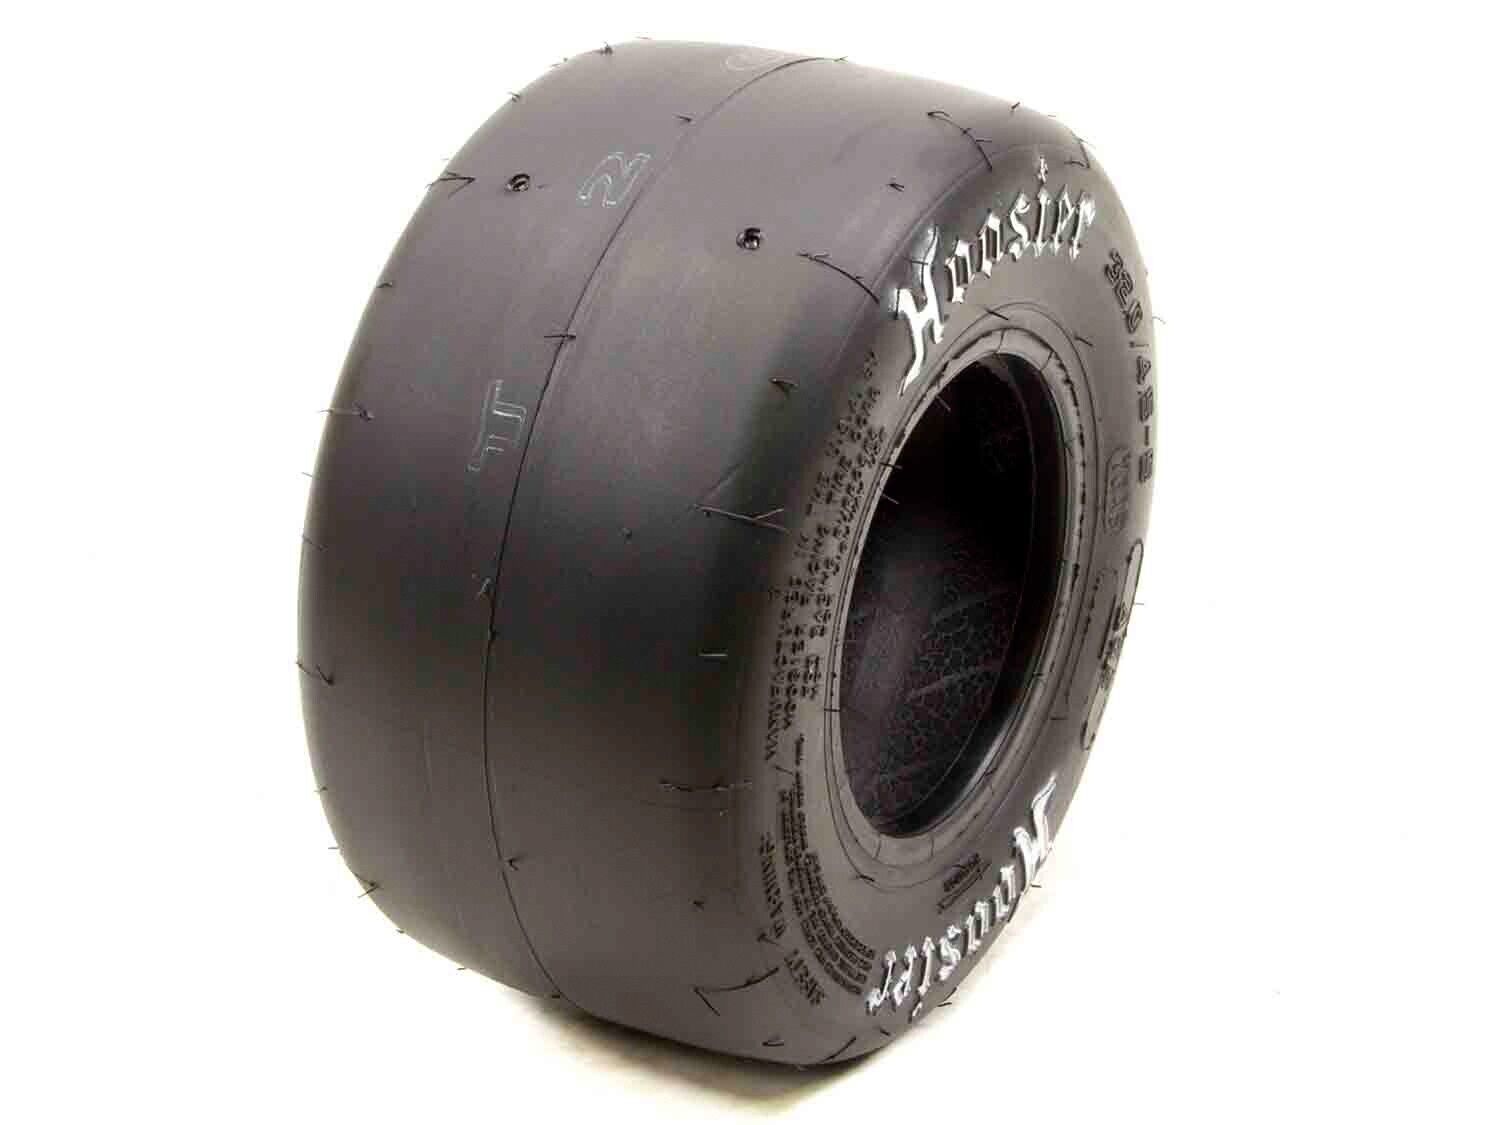 Hoosier 15325A35 Asphalt Quarter Midget Tire 33.0 x 5.0-6 Circle Track